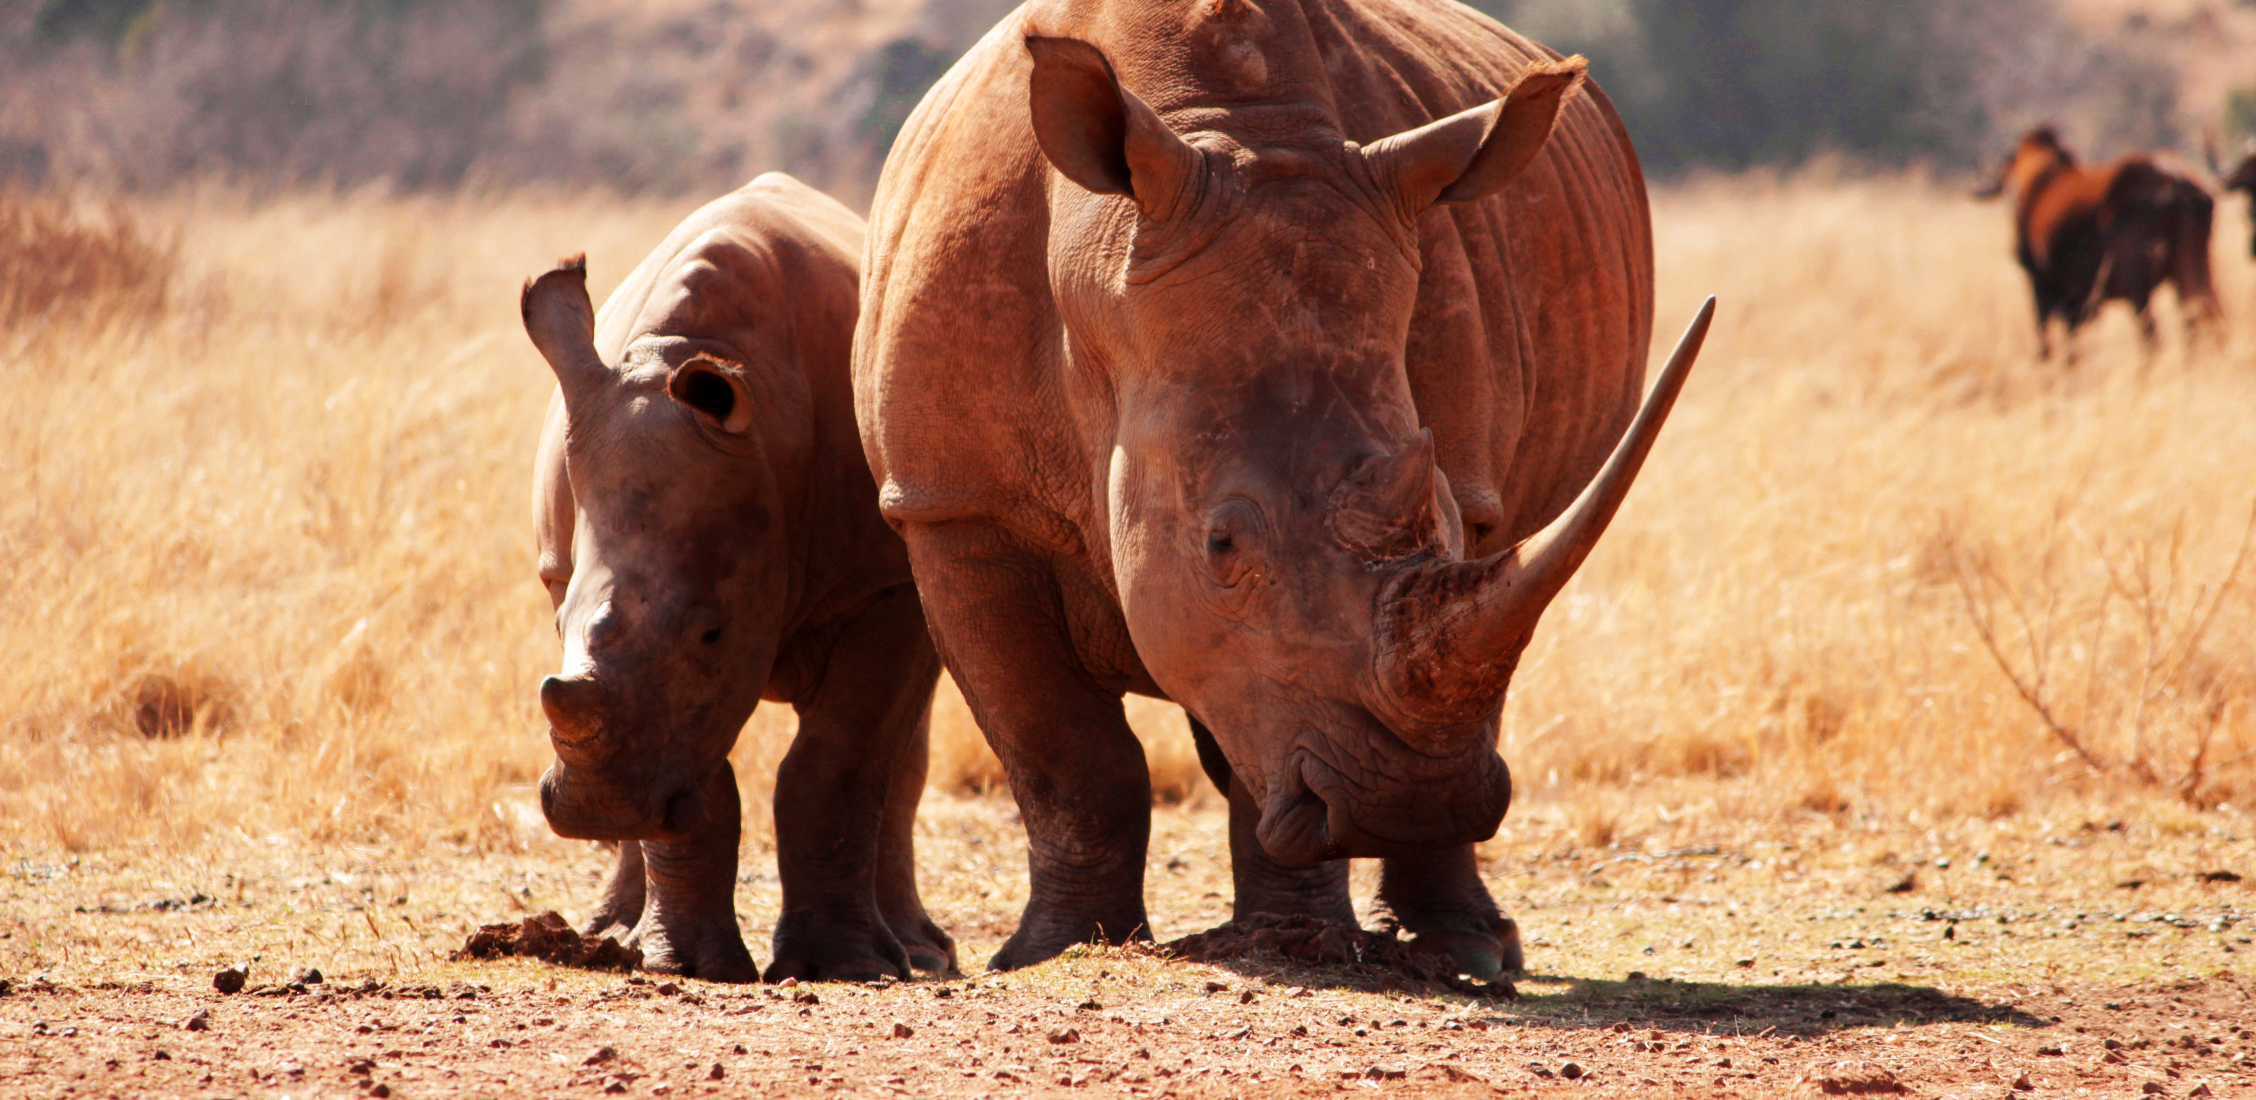 Saving baby rhinos by drinking gin